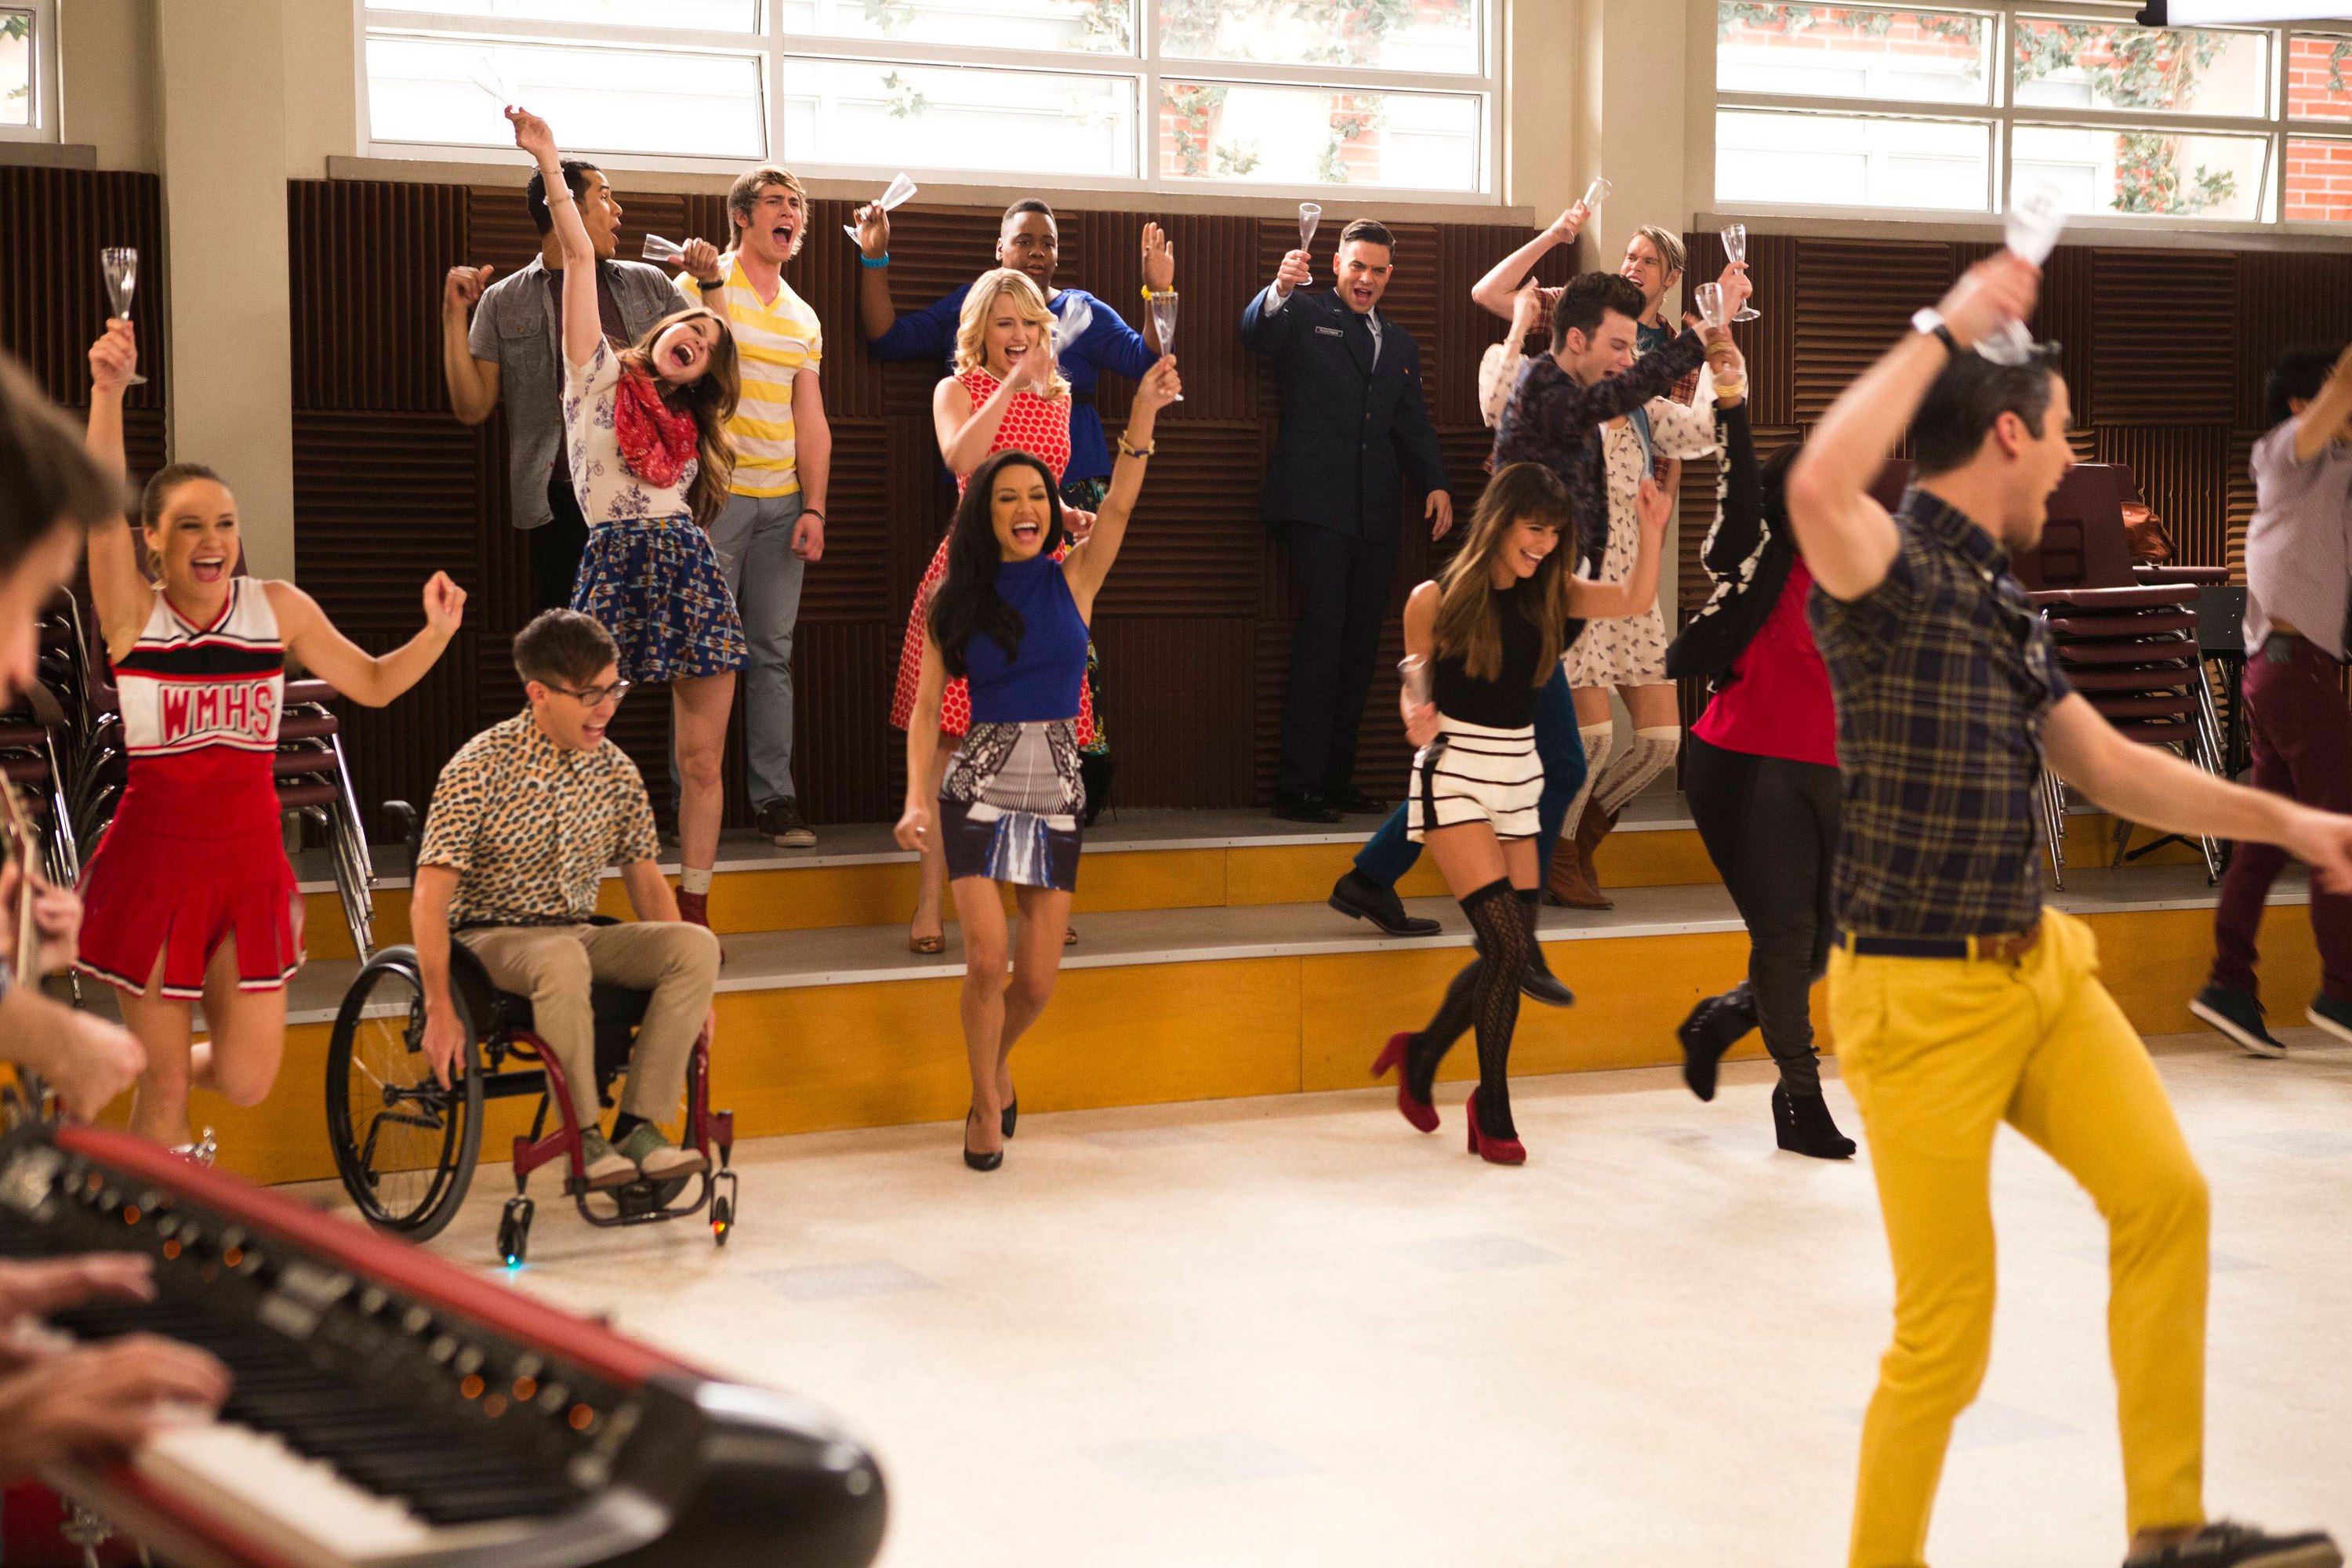 Quinn, Brittany, Santana, Kurt, Mercedes, and Artie in the Glee room